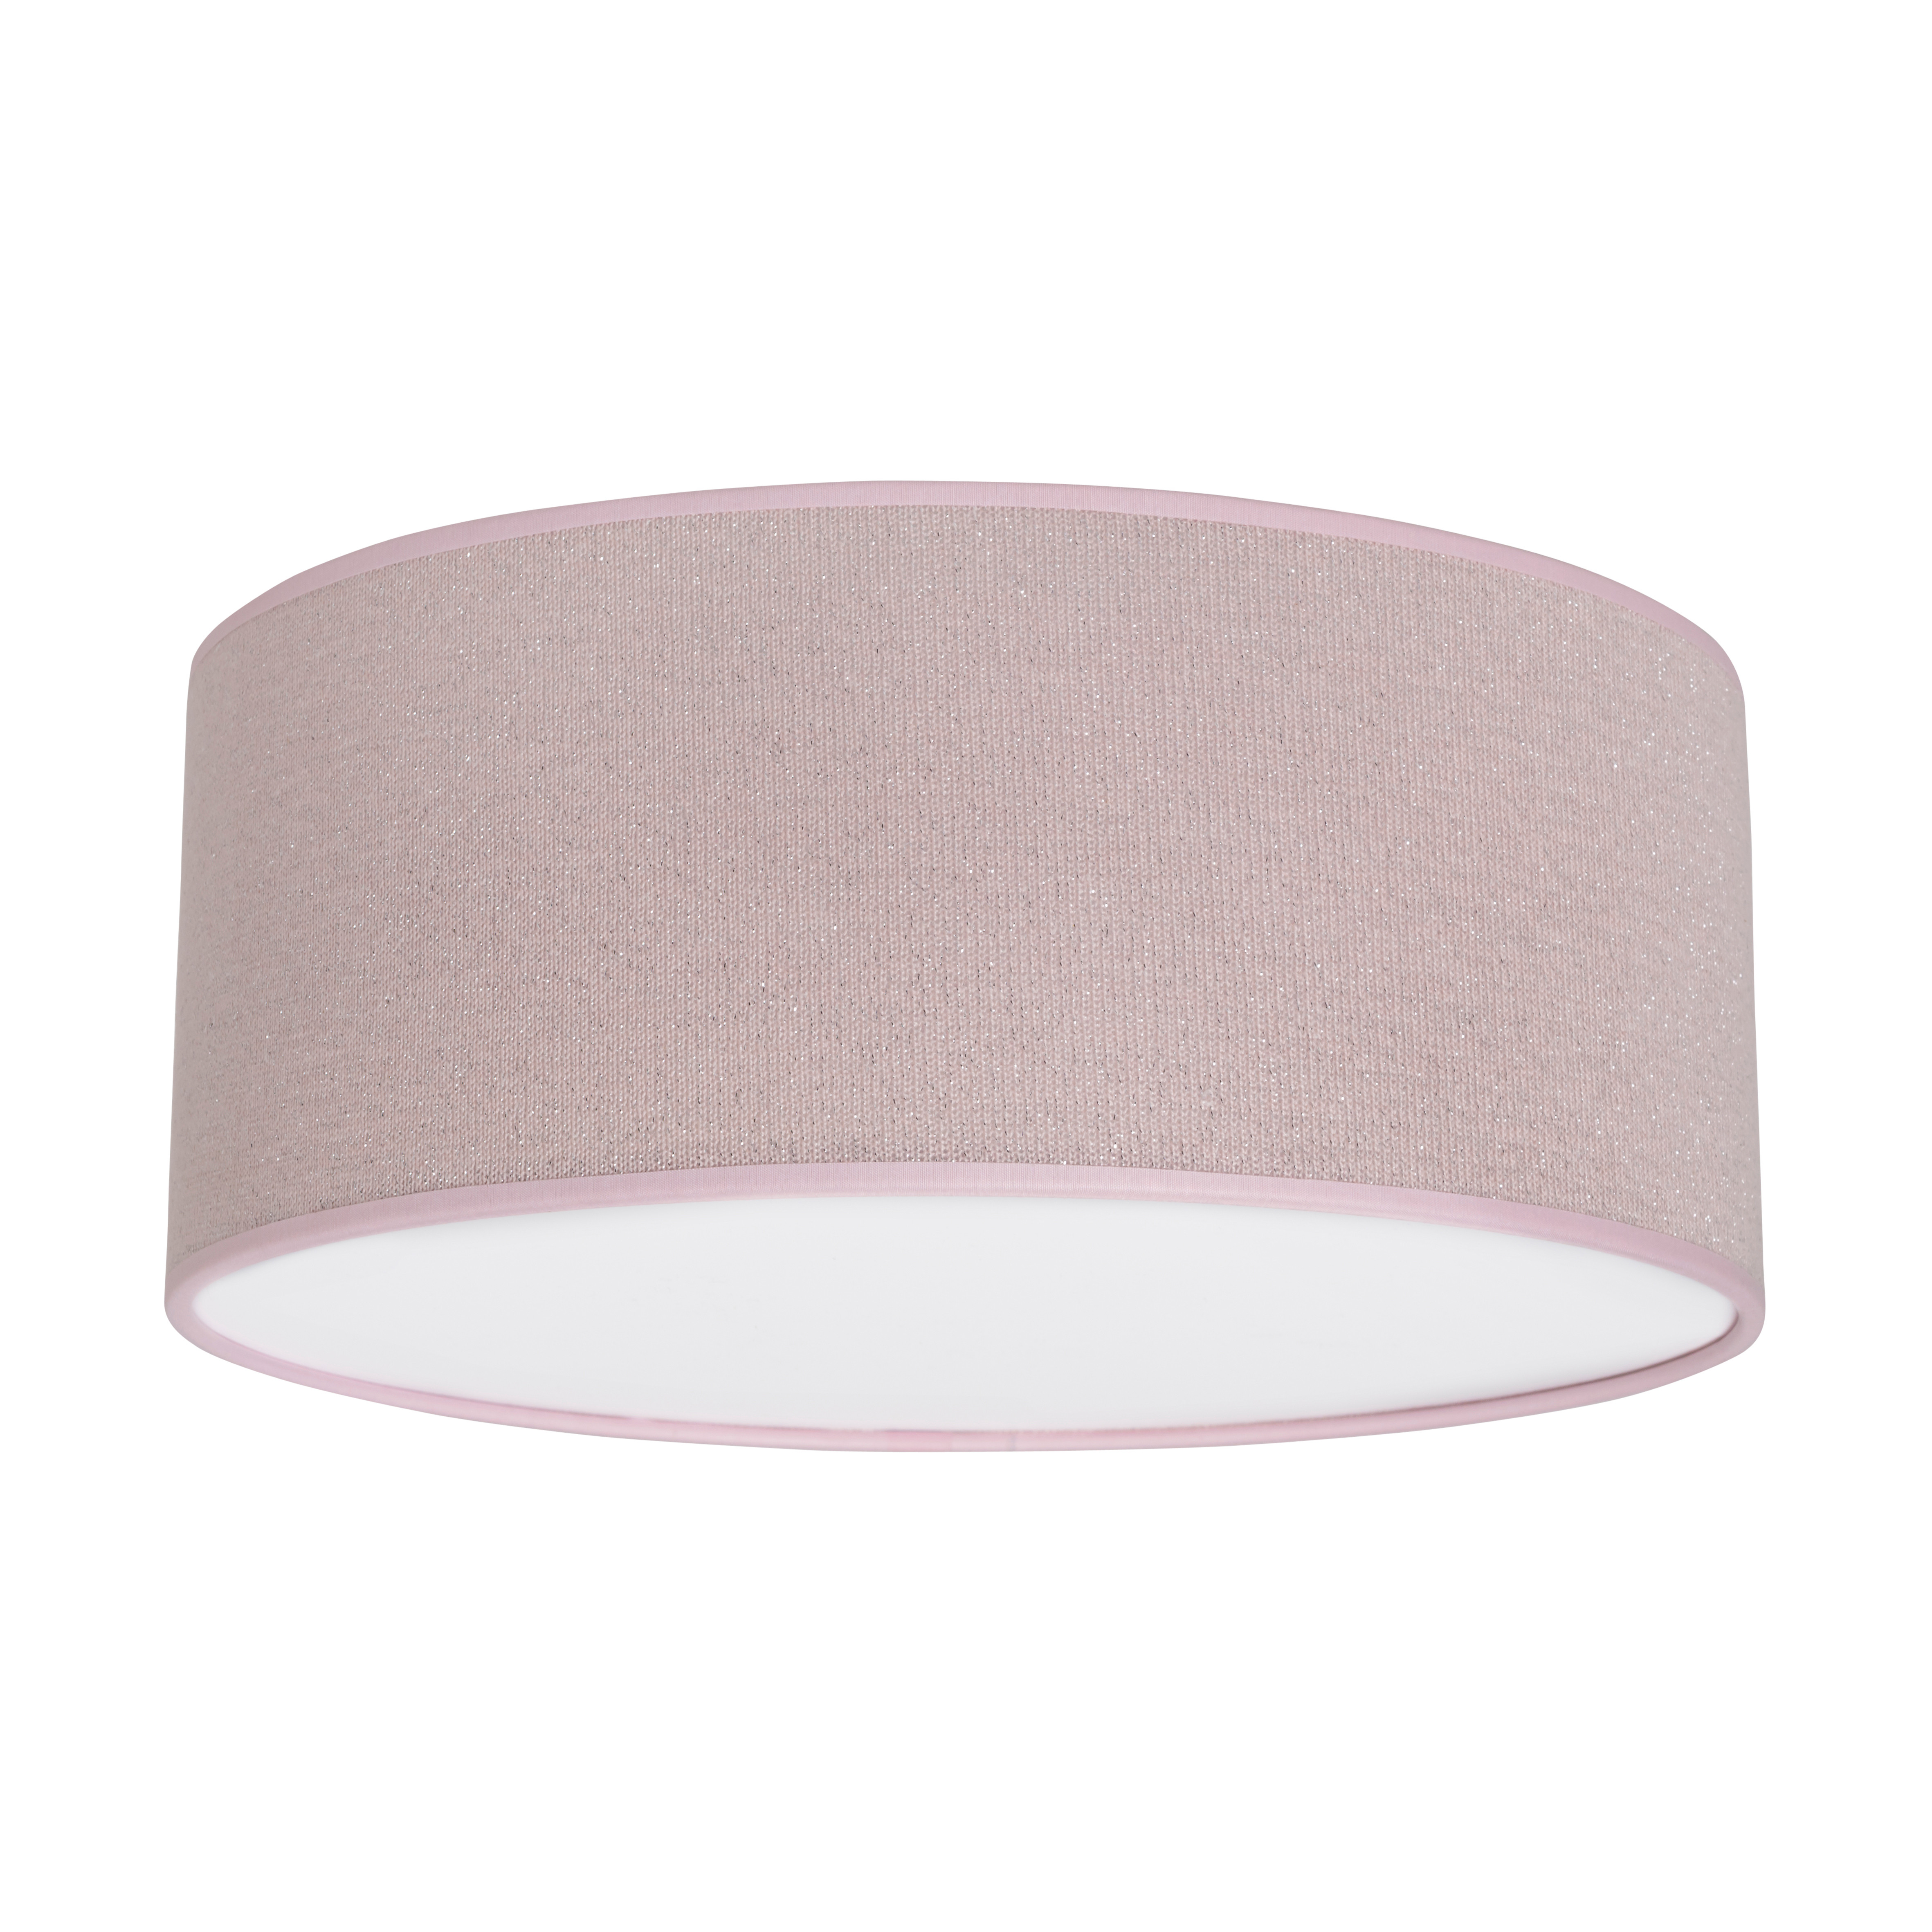 Ceiling lamp Sparkle silver-pink melee - Ø35 cm